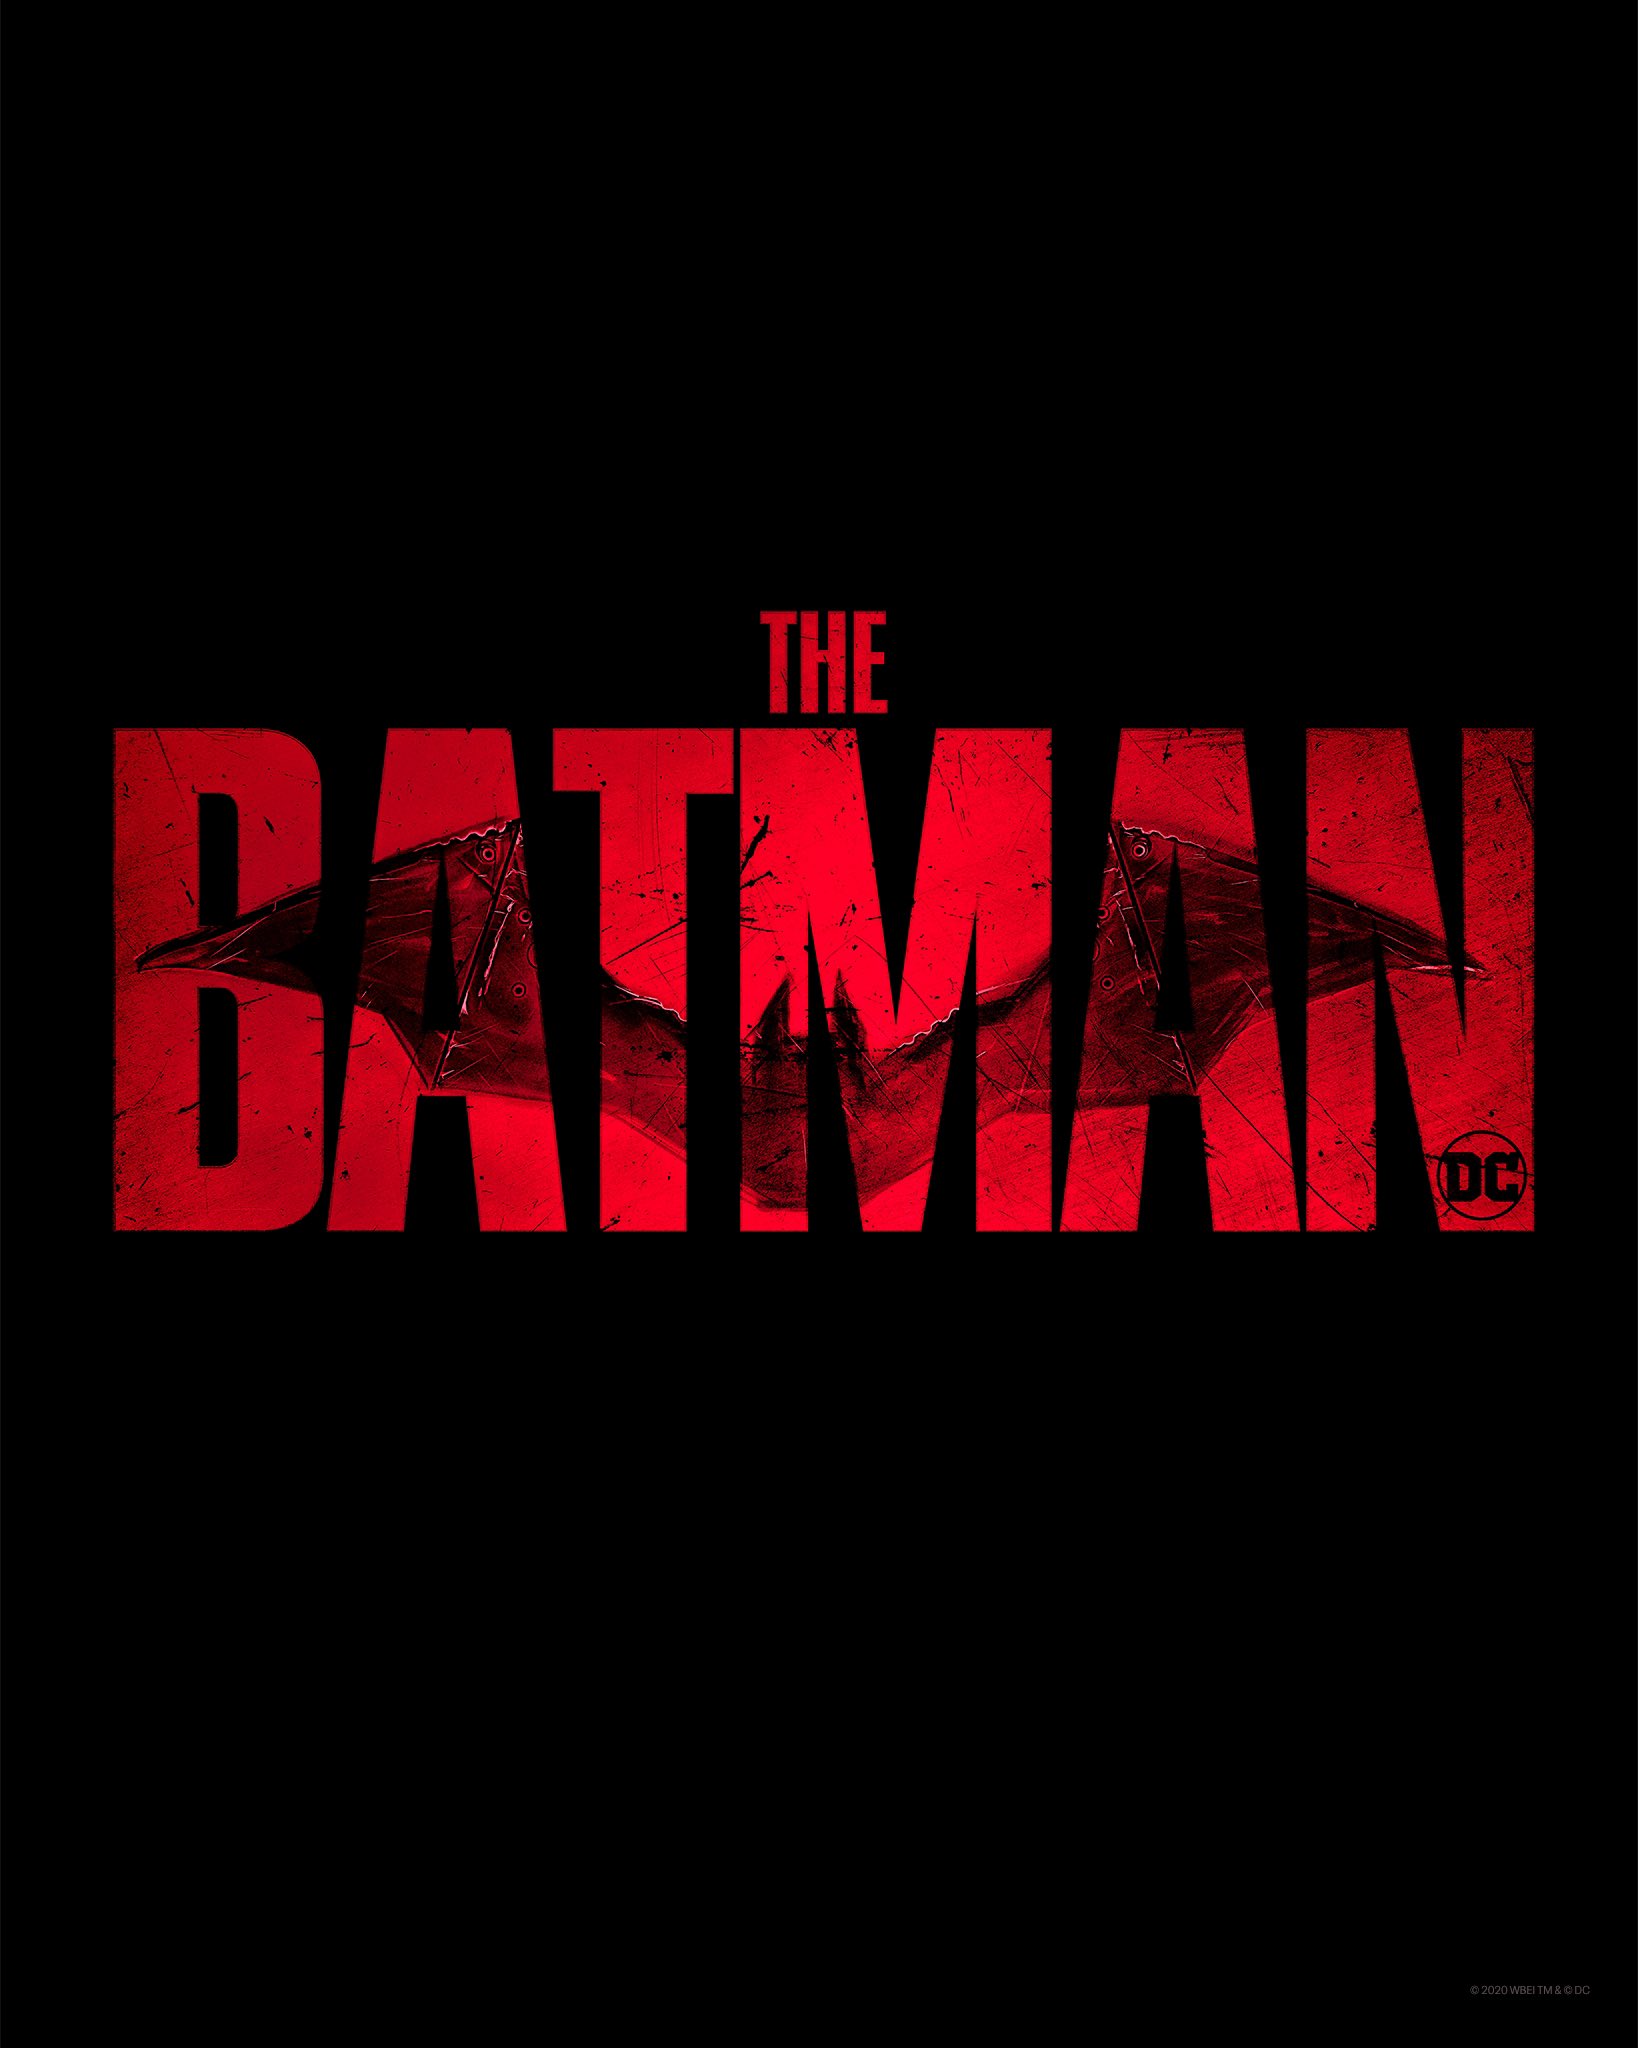 <a href="https://batman-on-film.com/11836/matt-reeves-reveals-the-batman-official-logo-fandome-art/">Official logo revealed</a>